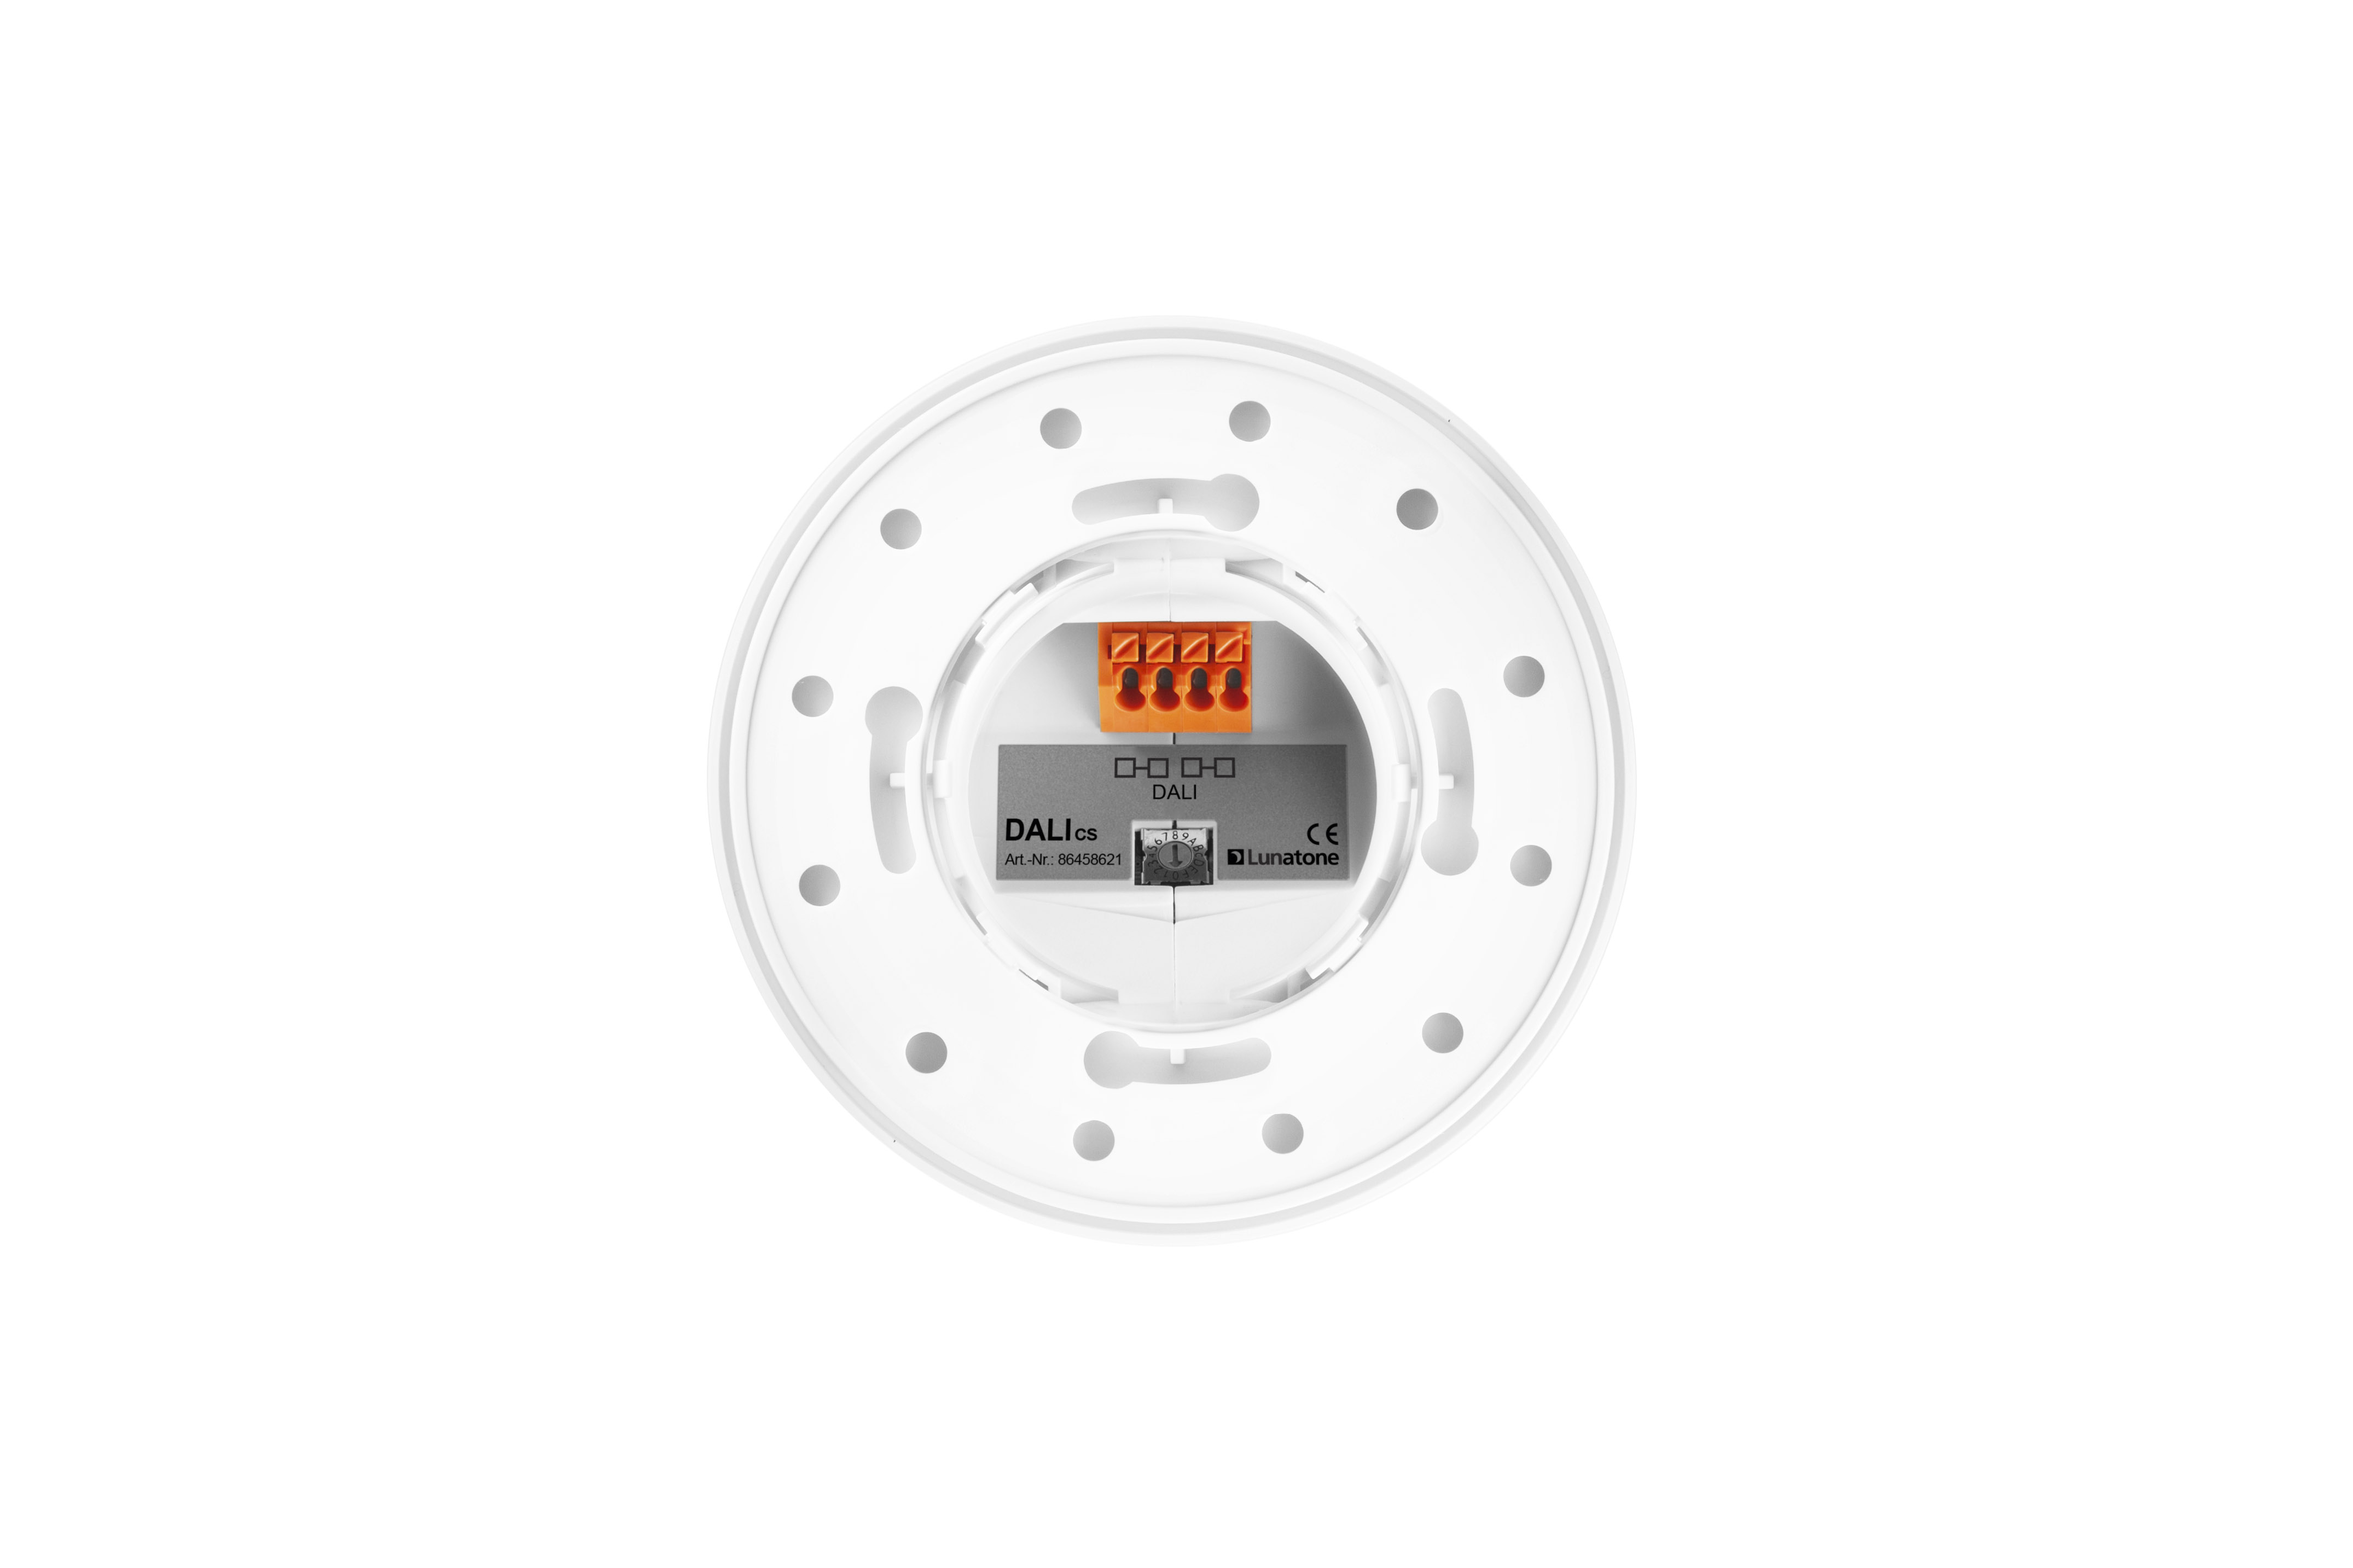 Lunatone Combi Sensor Modul DALI CS Verkehrsweiß matt - 86458621-W16